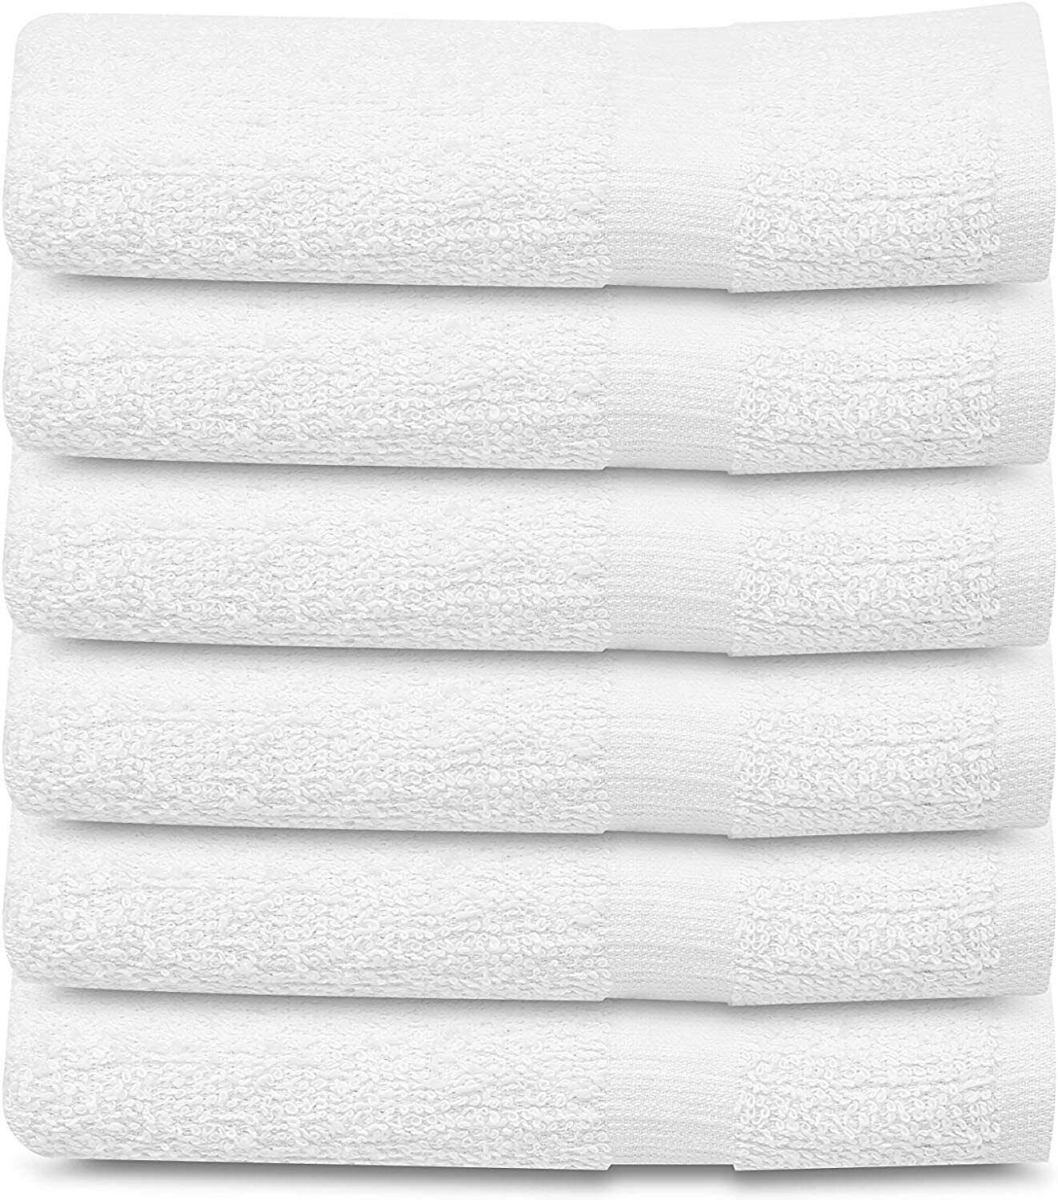 Picture of Jubilee J15 Bath Towels 6 Pack &apos;22x44&apos; White Cotton Towel Set Bath Pool Gym Towels Beach